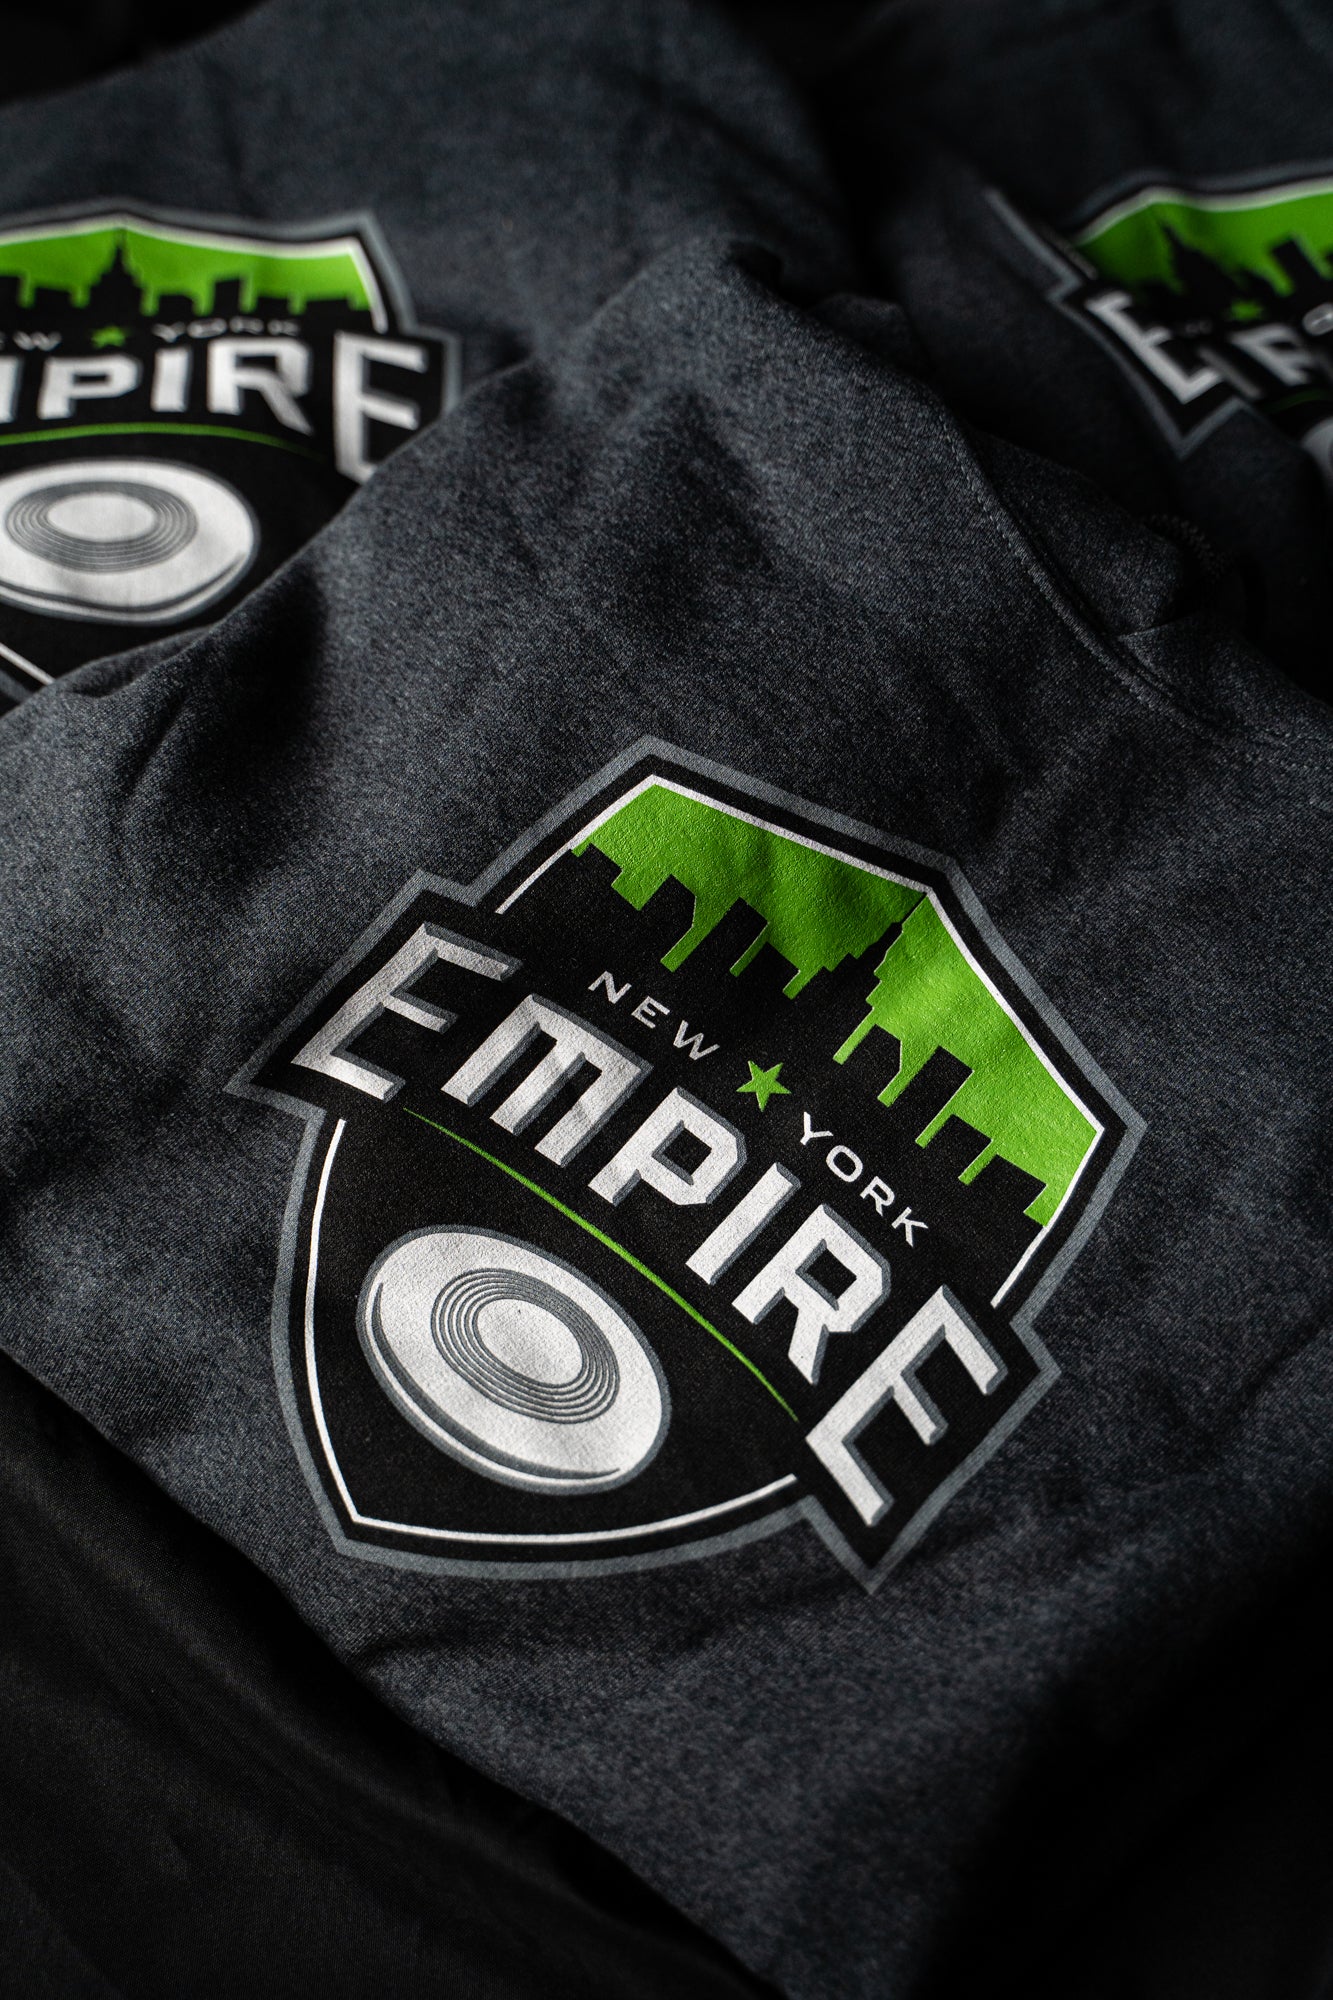 empire jersey